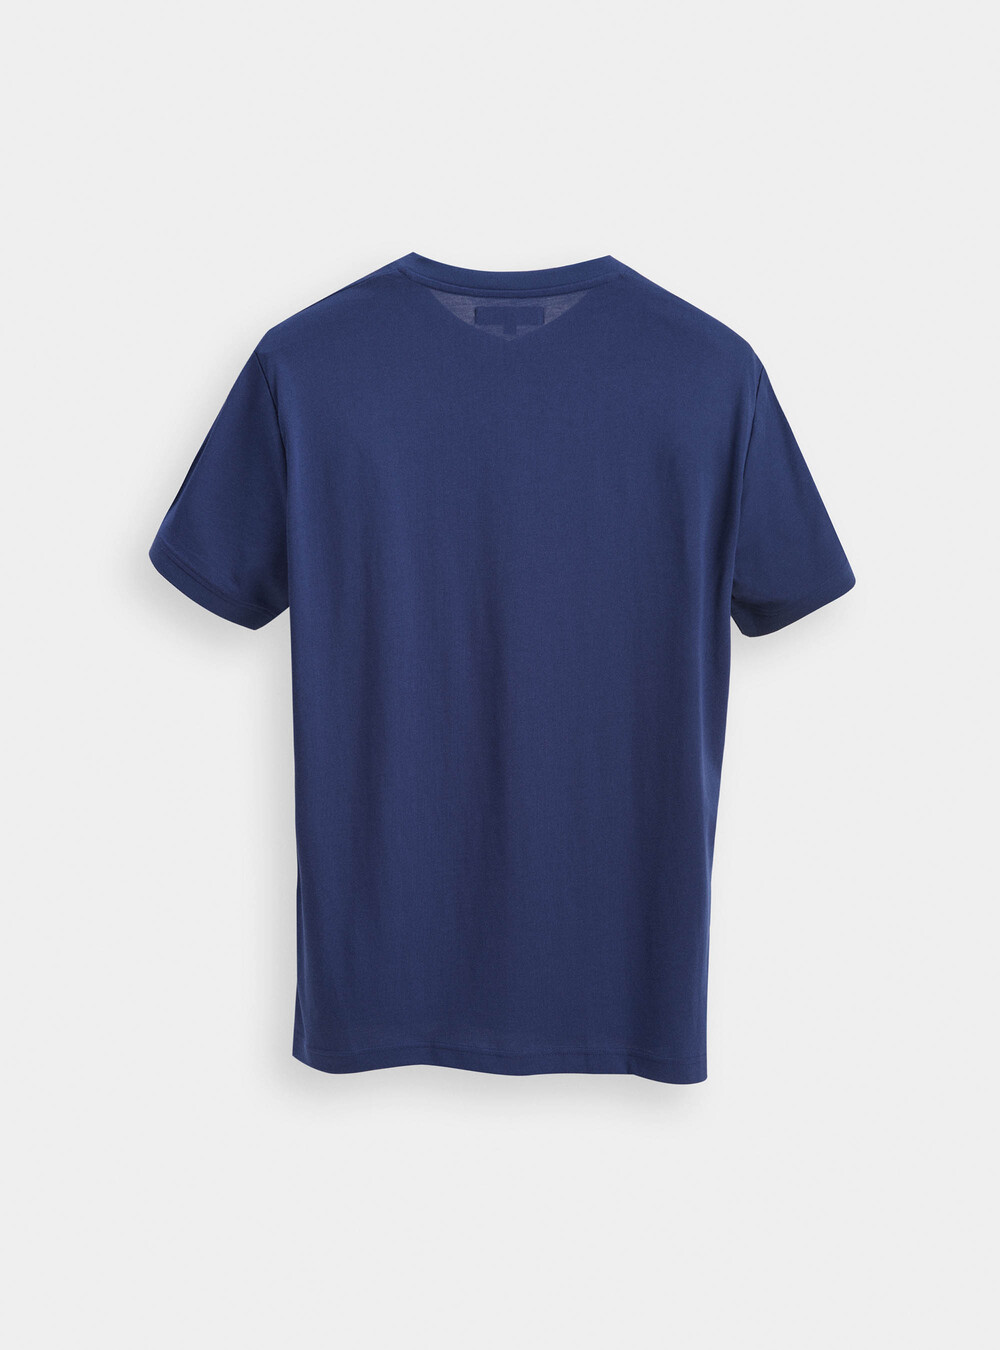 Serafino T-shirt in 100% cotton supima jersey | GutteridgeUS | Clothing Uomo